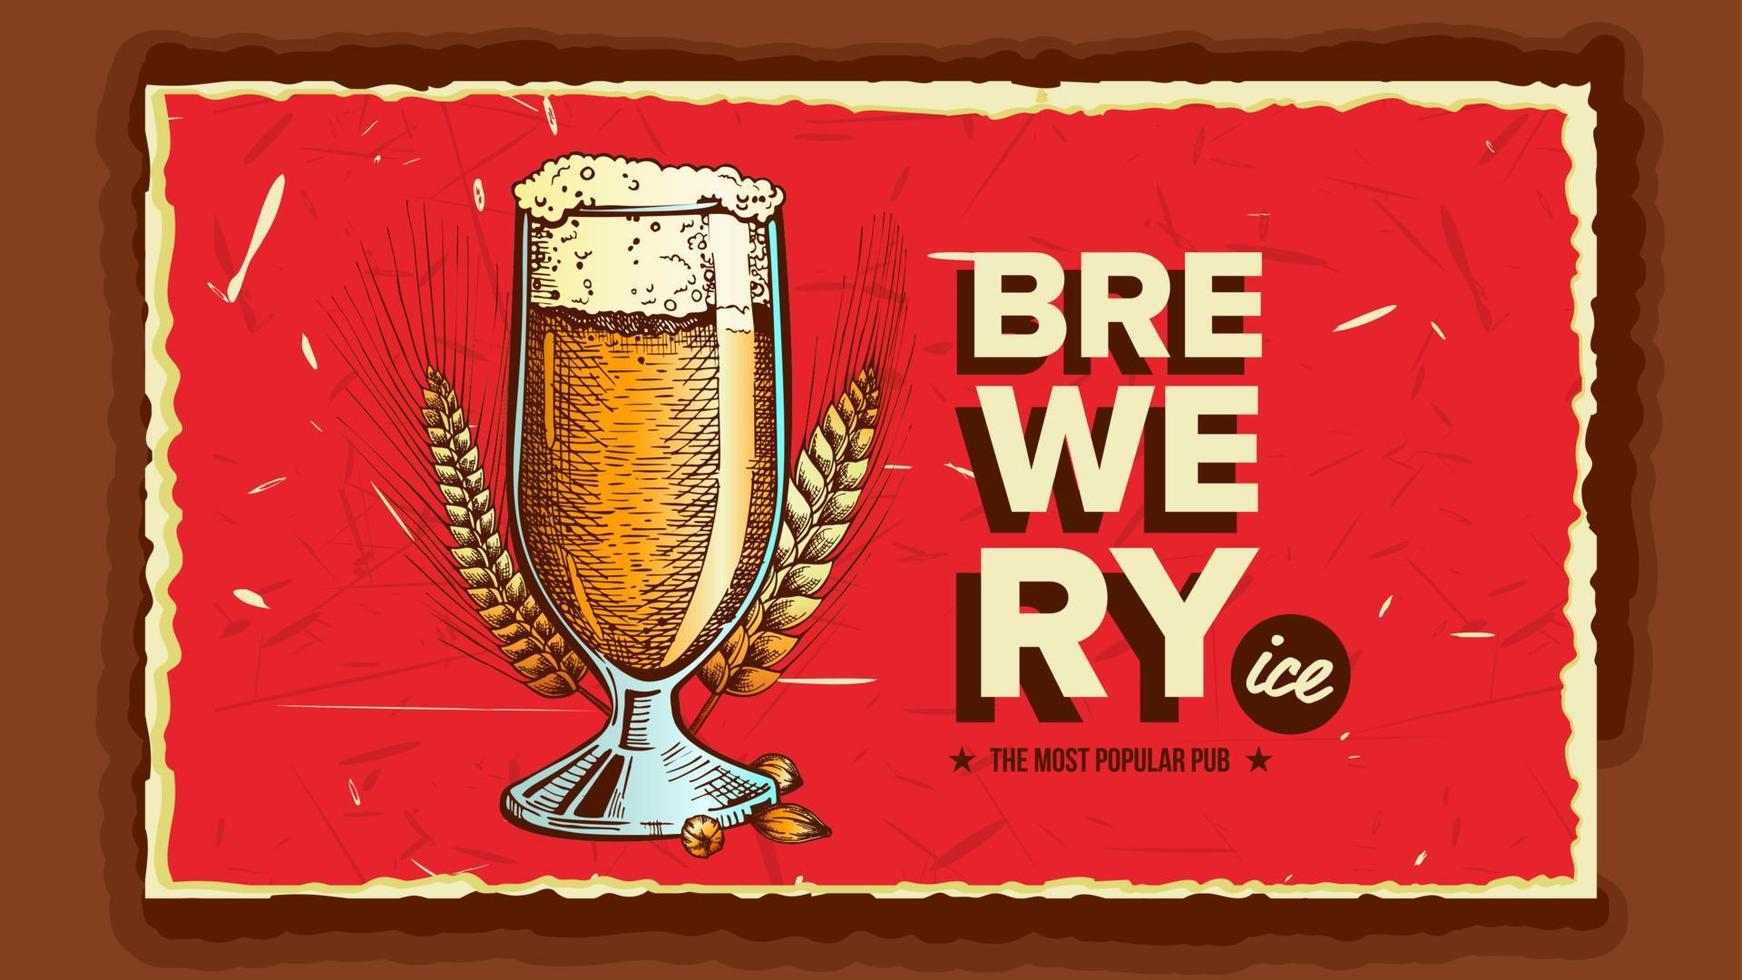 Foamy Beer Glass Brewery Advertising Banner Vector